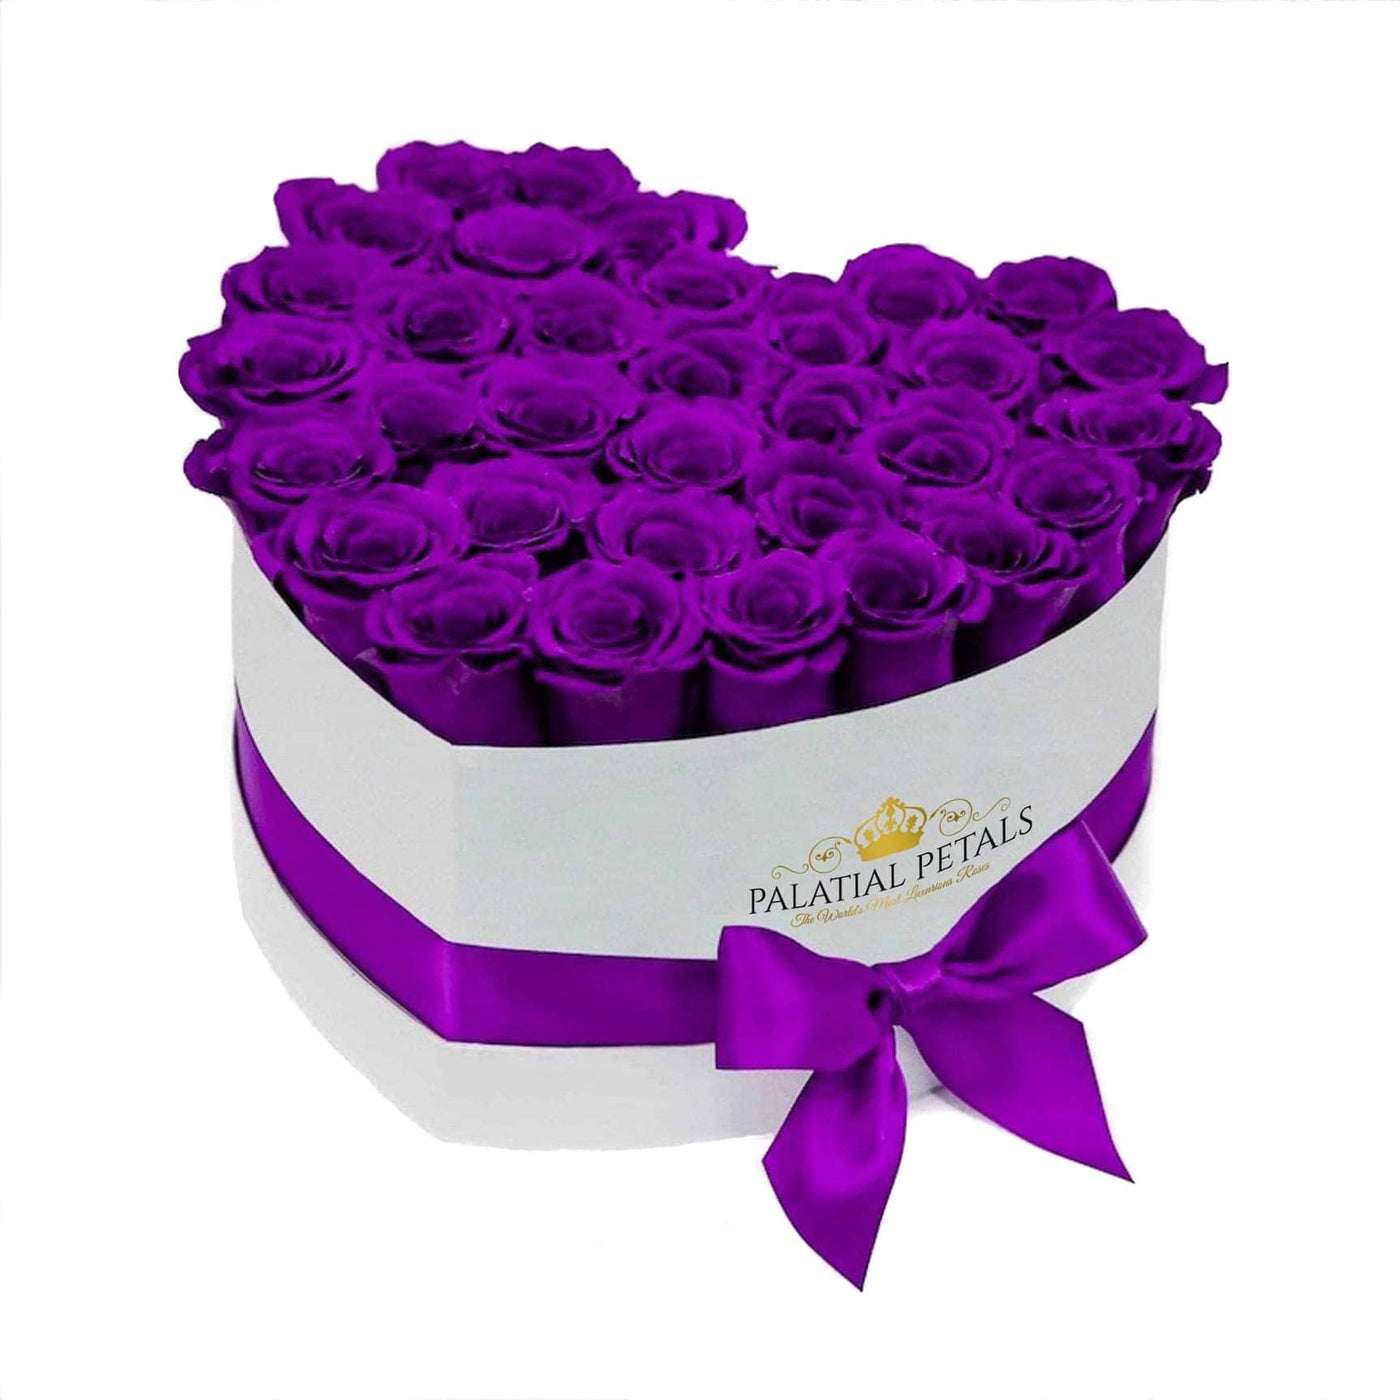 Purple Roses That Last A Year - Love Heart Box